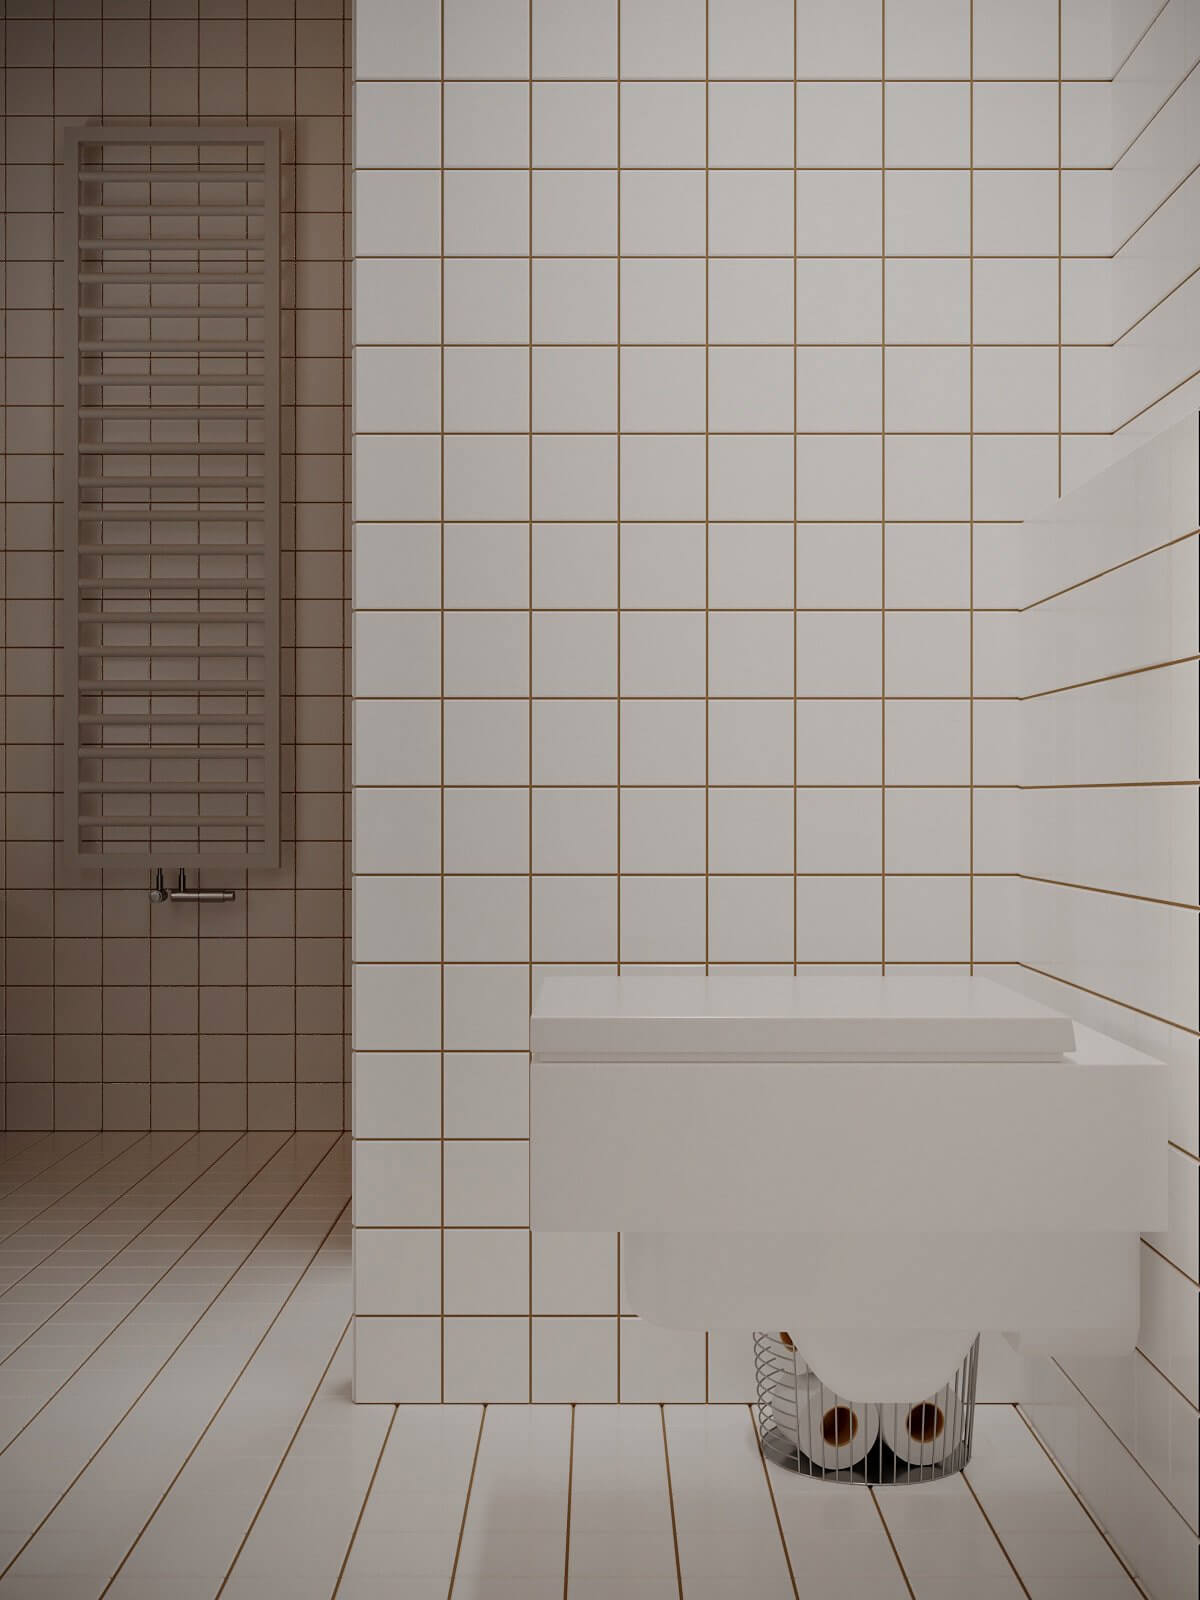 Royal Tower Apartment bathroom wc 2 - cgi visualization